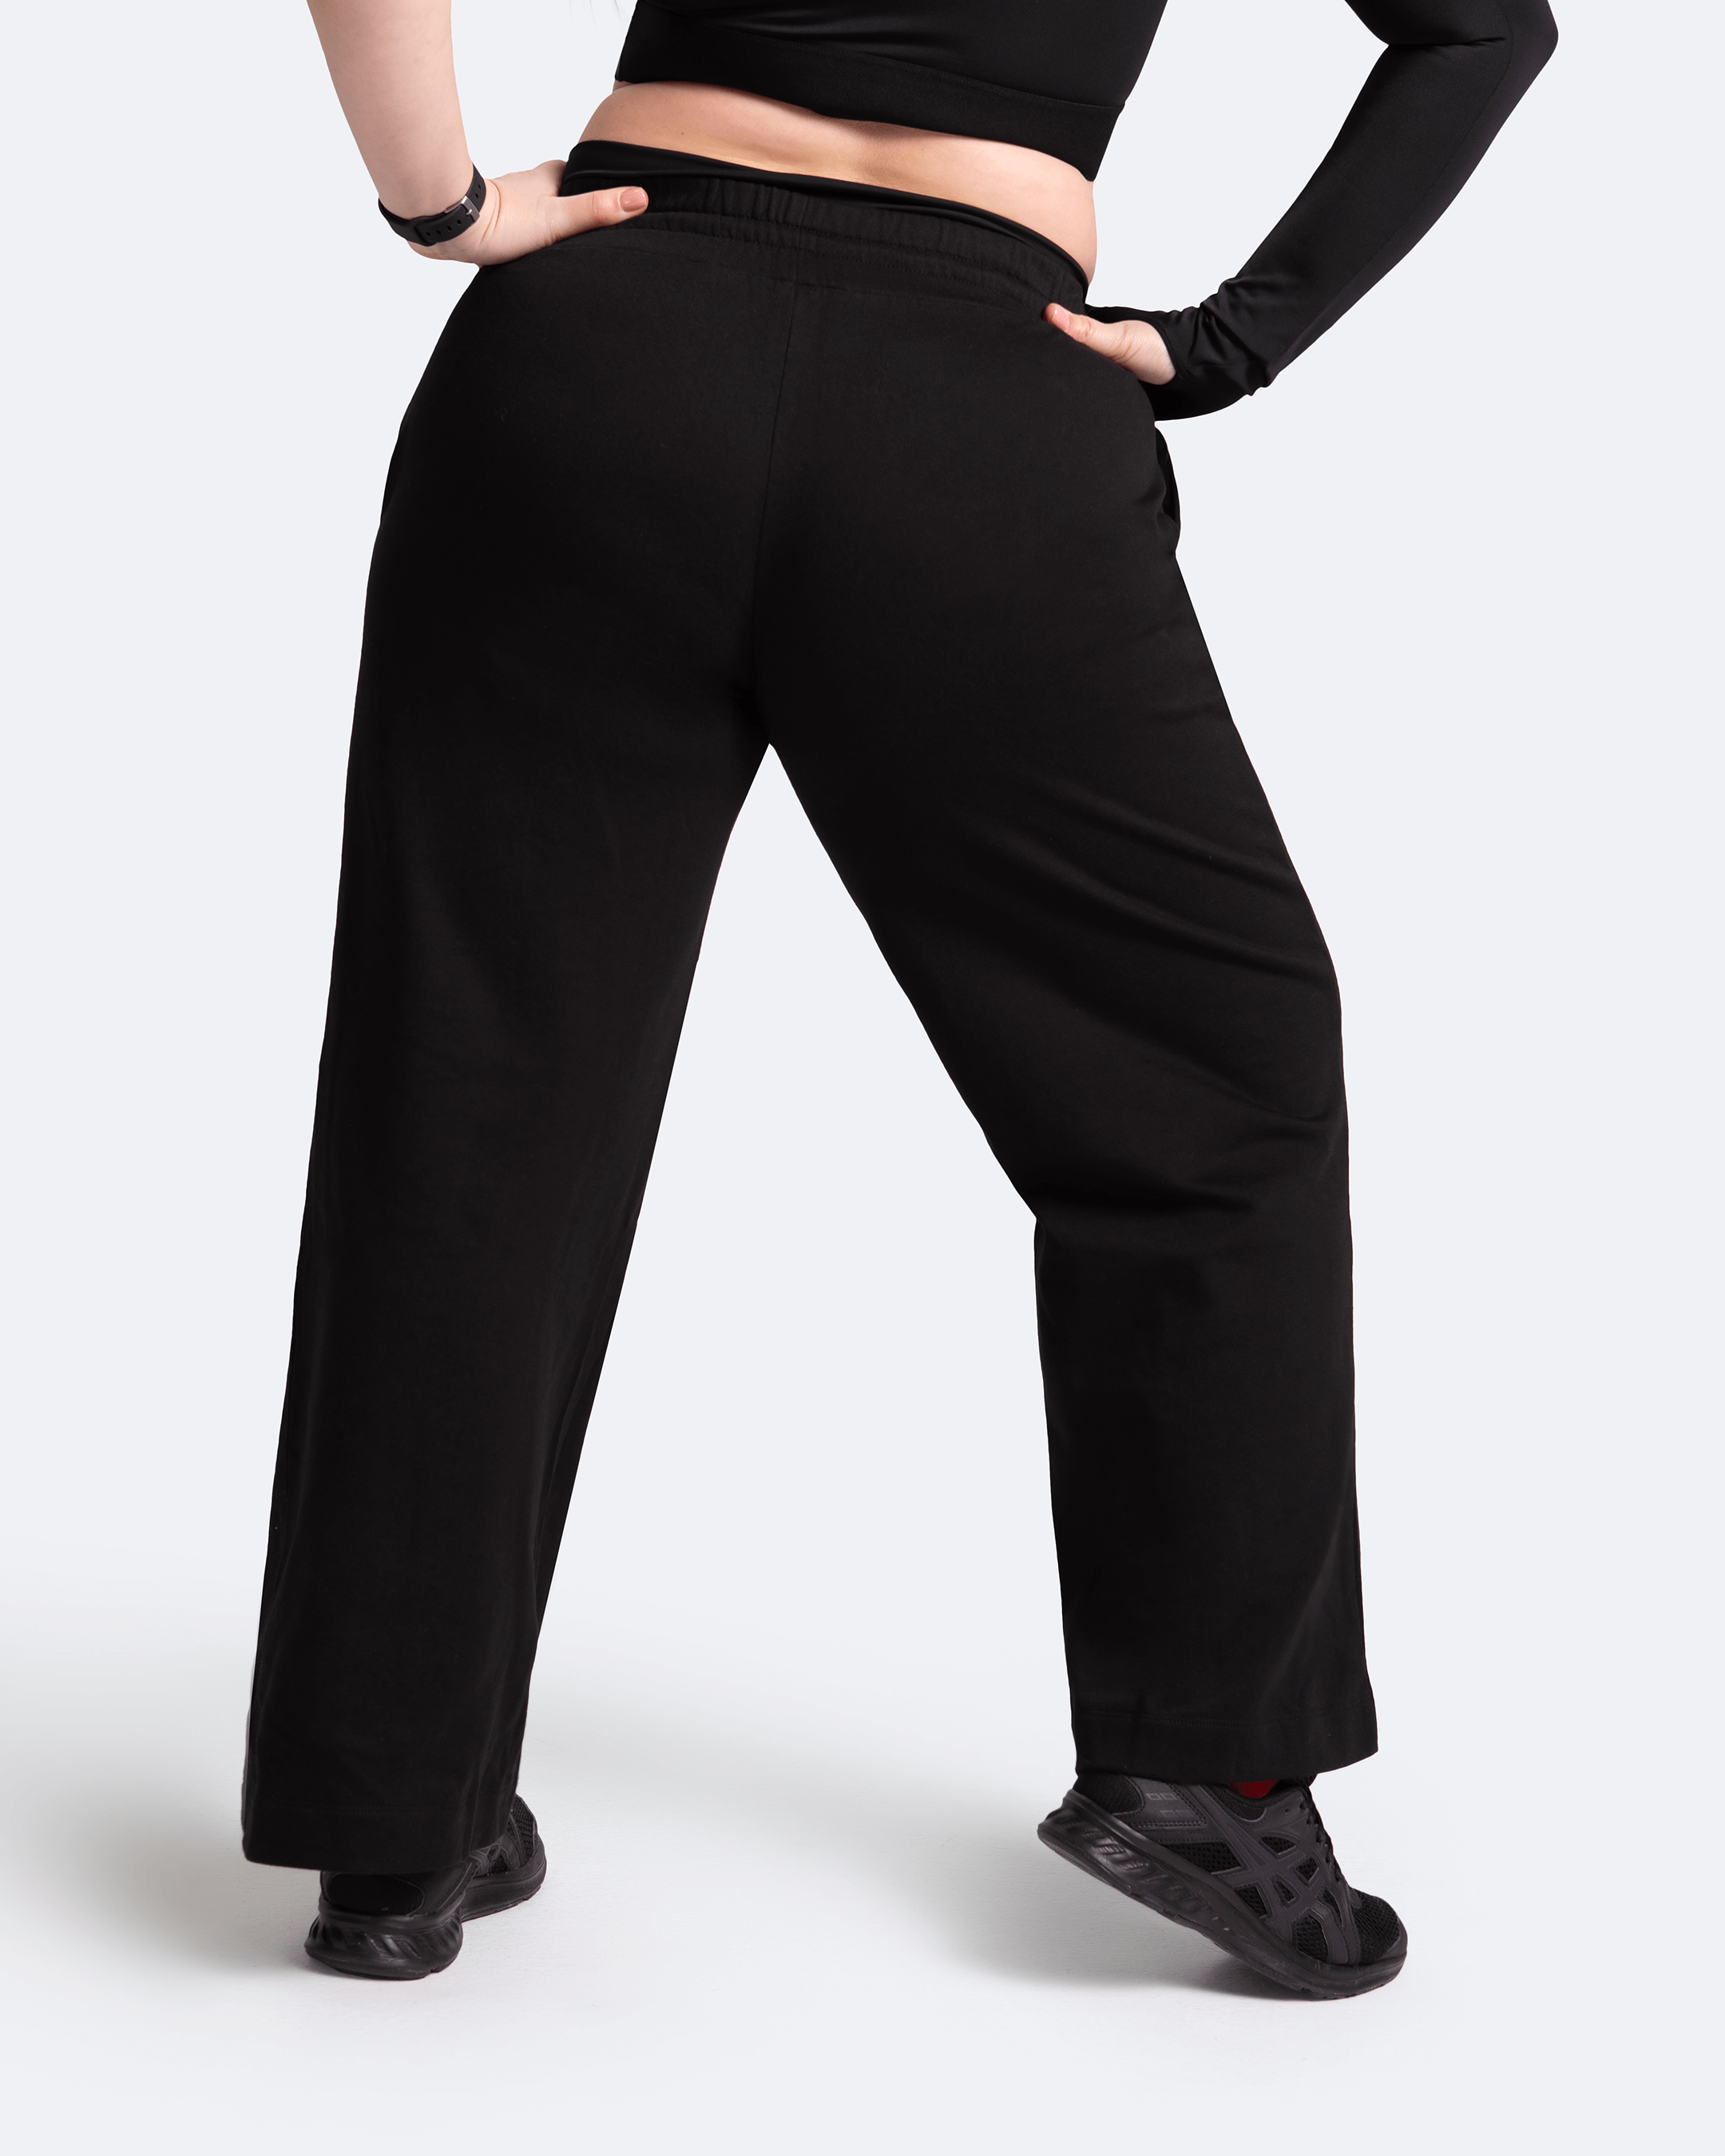 Vedolay Straight Leg Pants For Women Women Boho Trousers Comfy Sweatpants  Leisure Urban Dance Pants,Black M